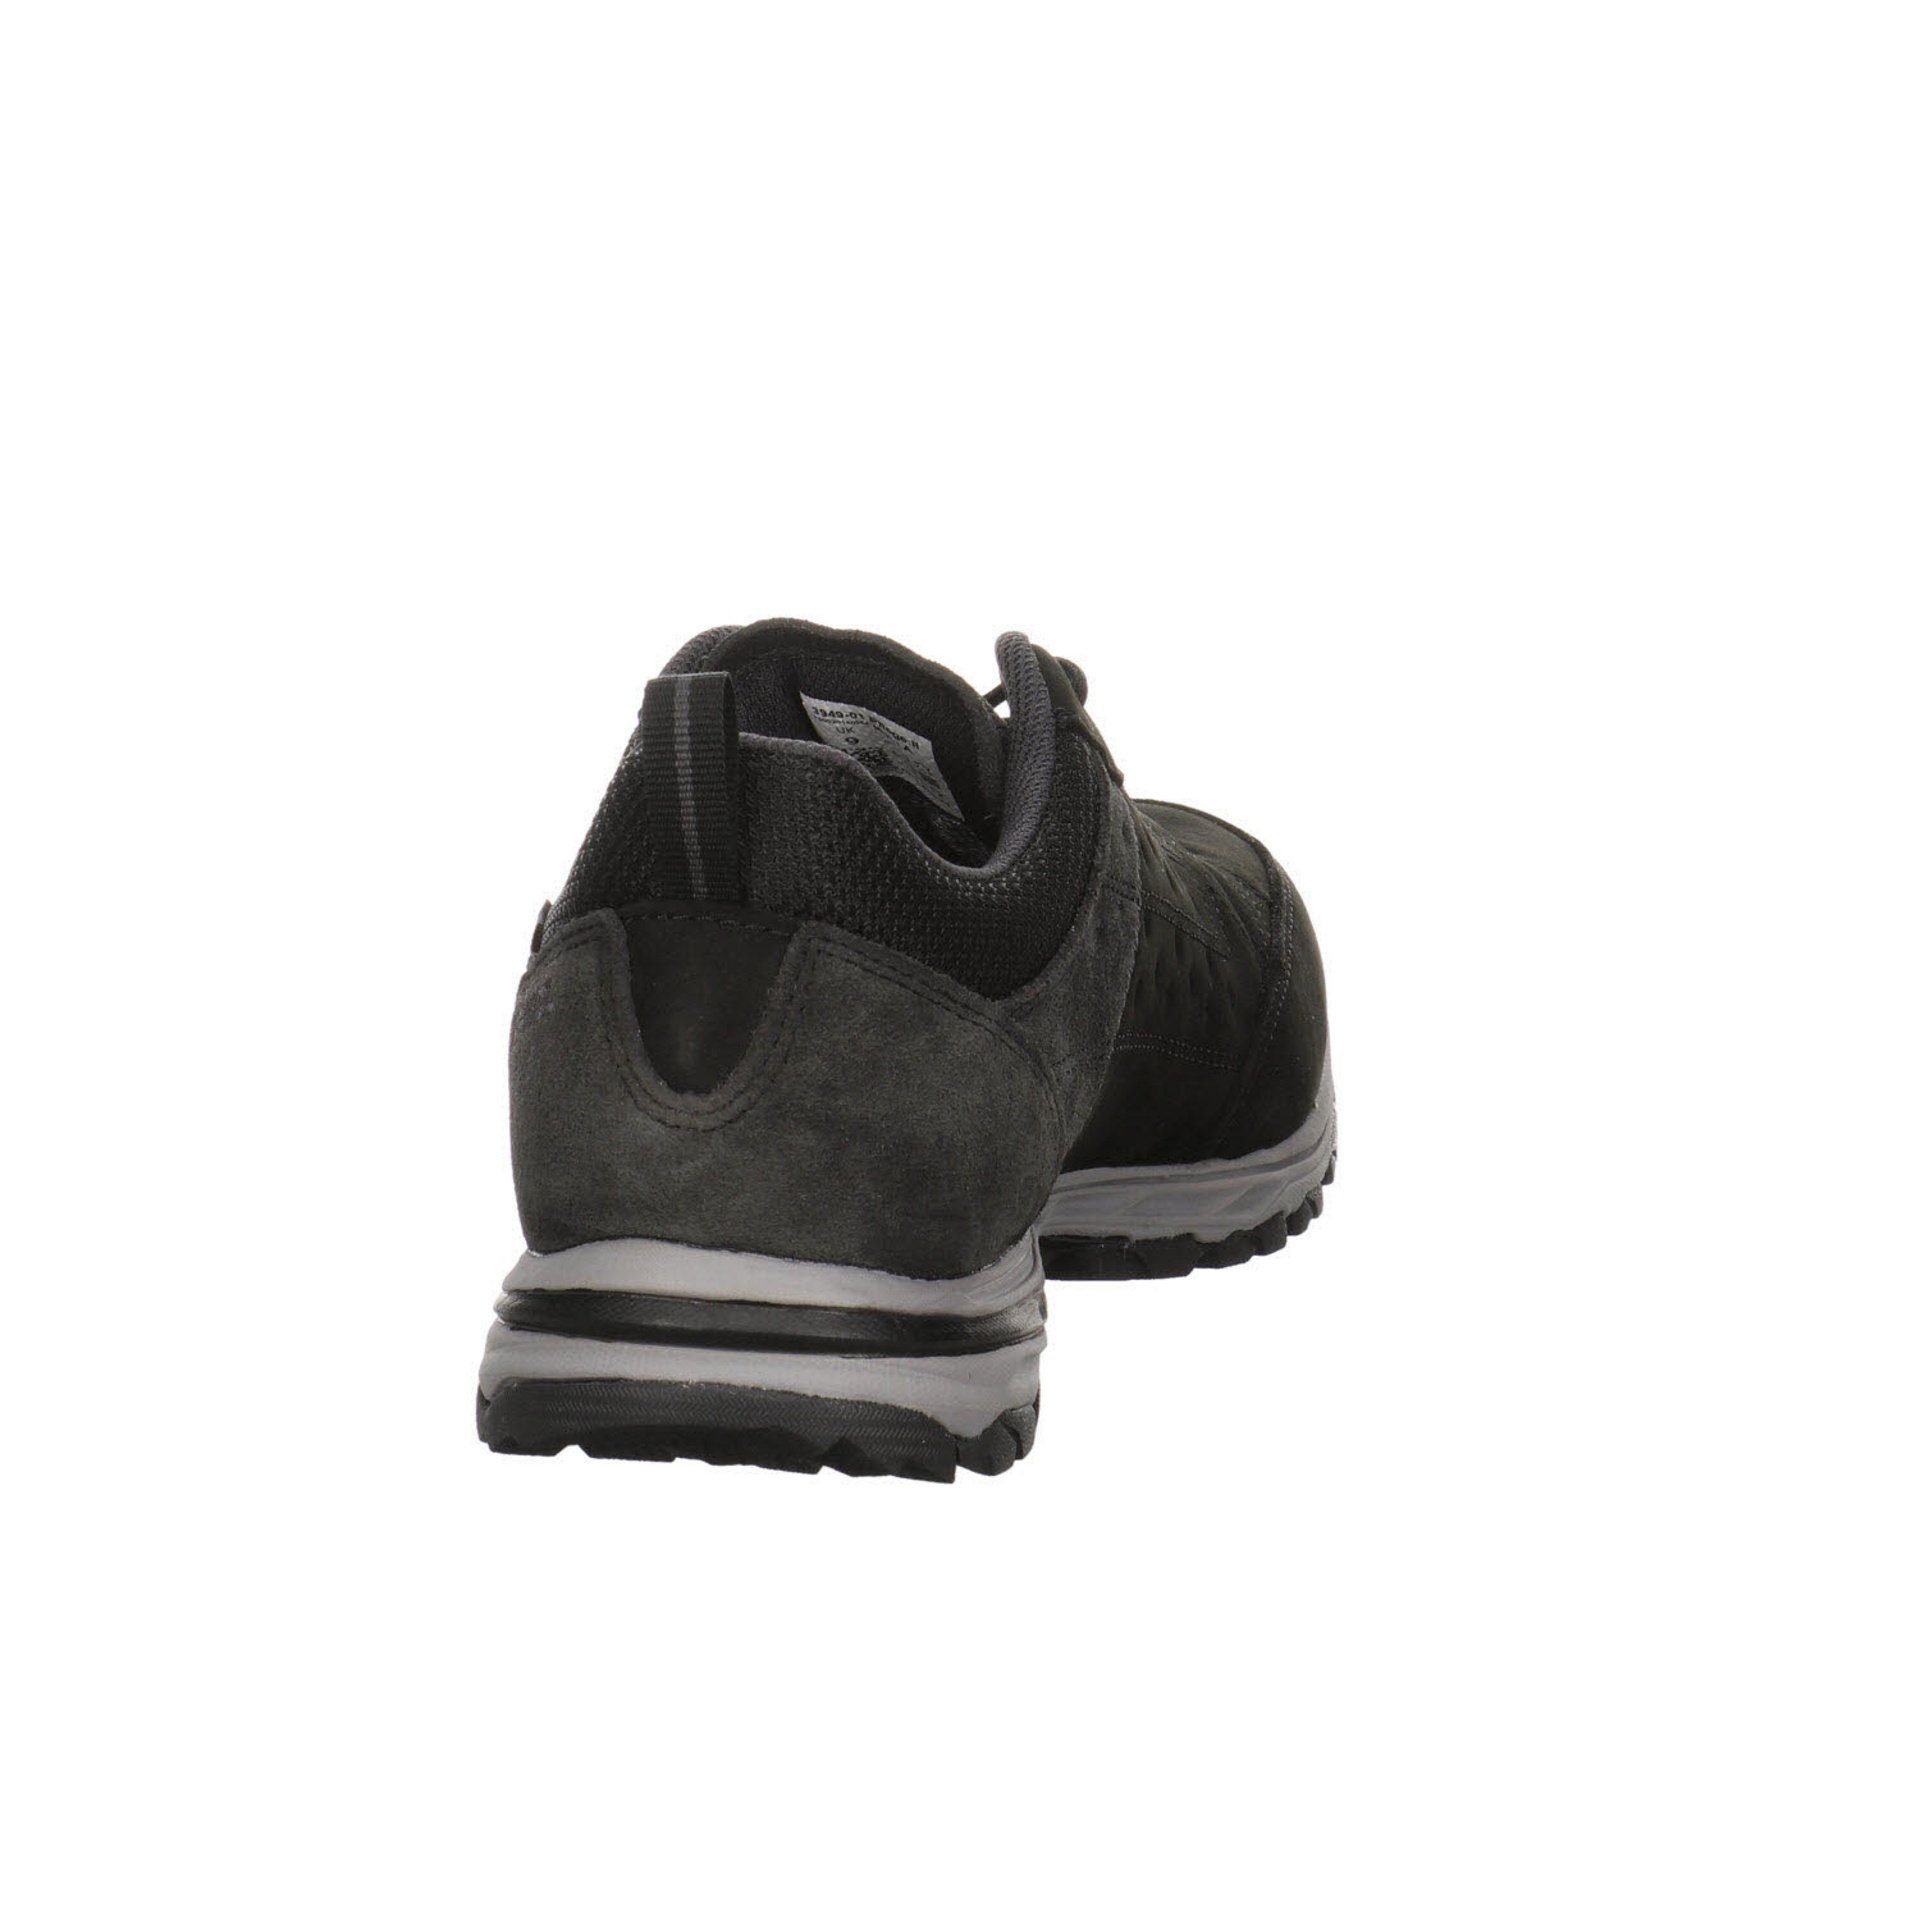 Herren Leder-/Textilkombination schwarz Outdoorschuh Durban Schuhe Outdoorschuh Outdoor dunkel Meindl GTX